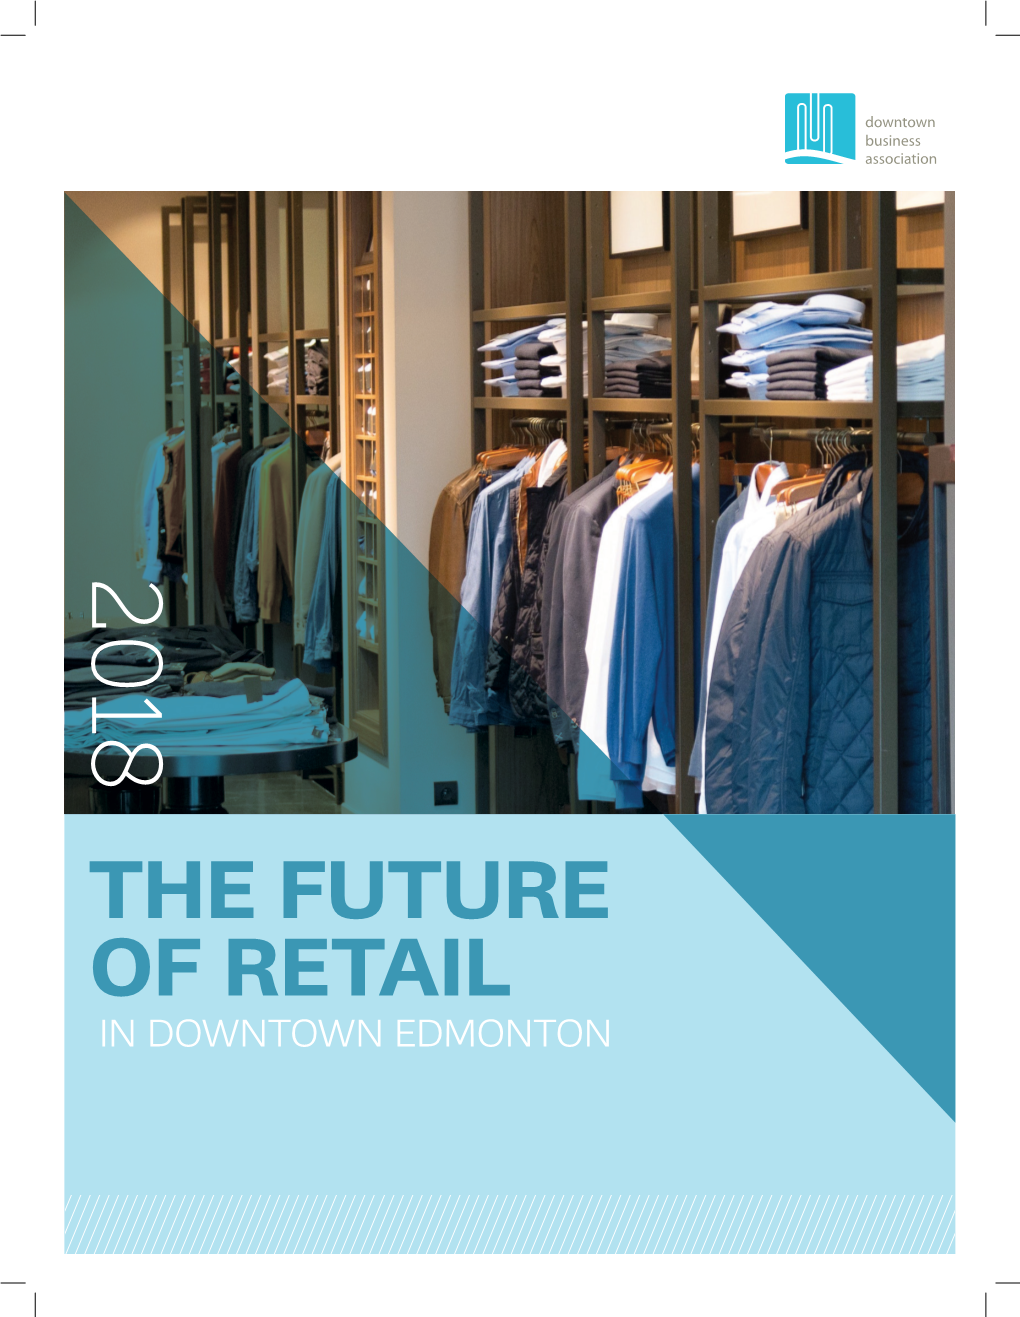 The Future of Retail 2018 in Downtown Edmonton